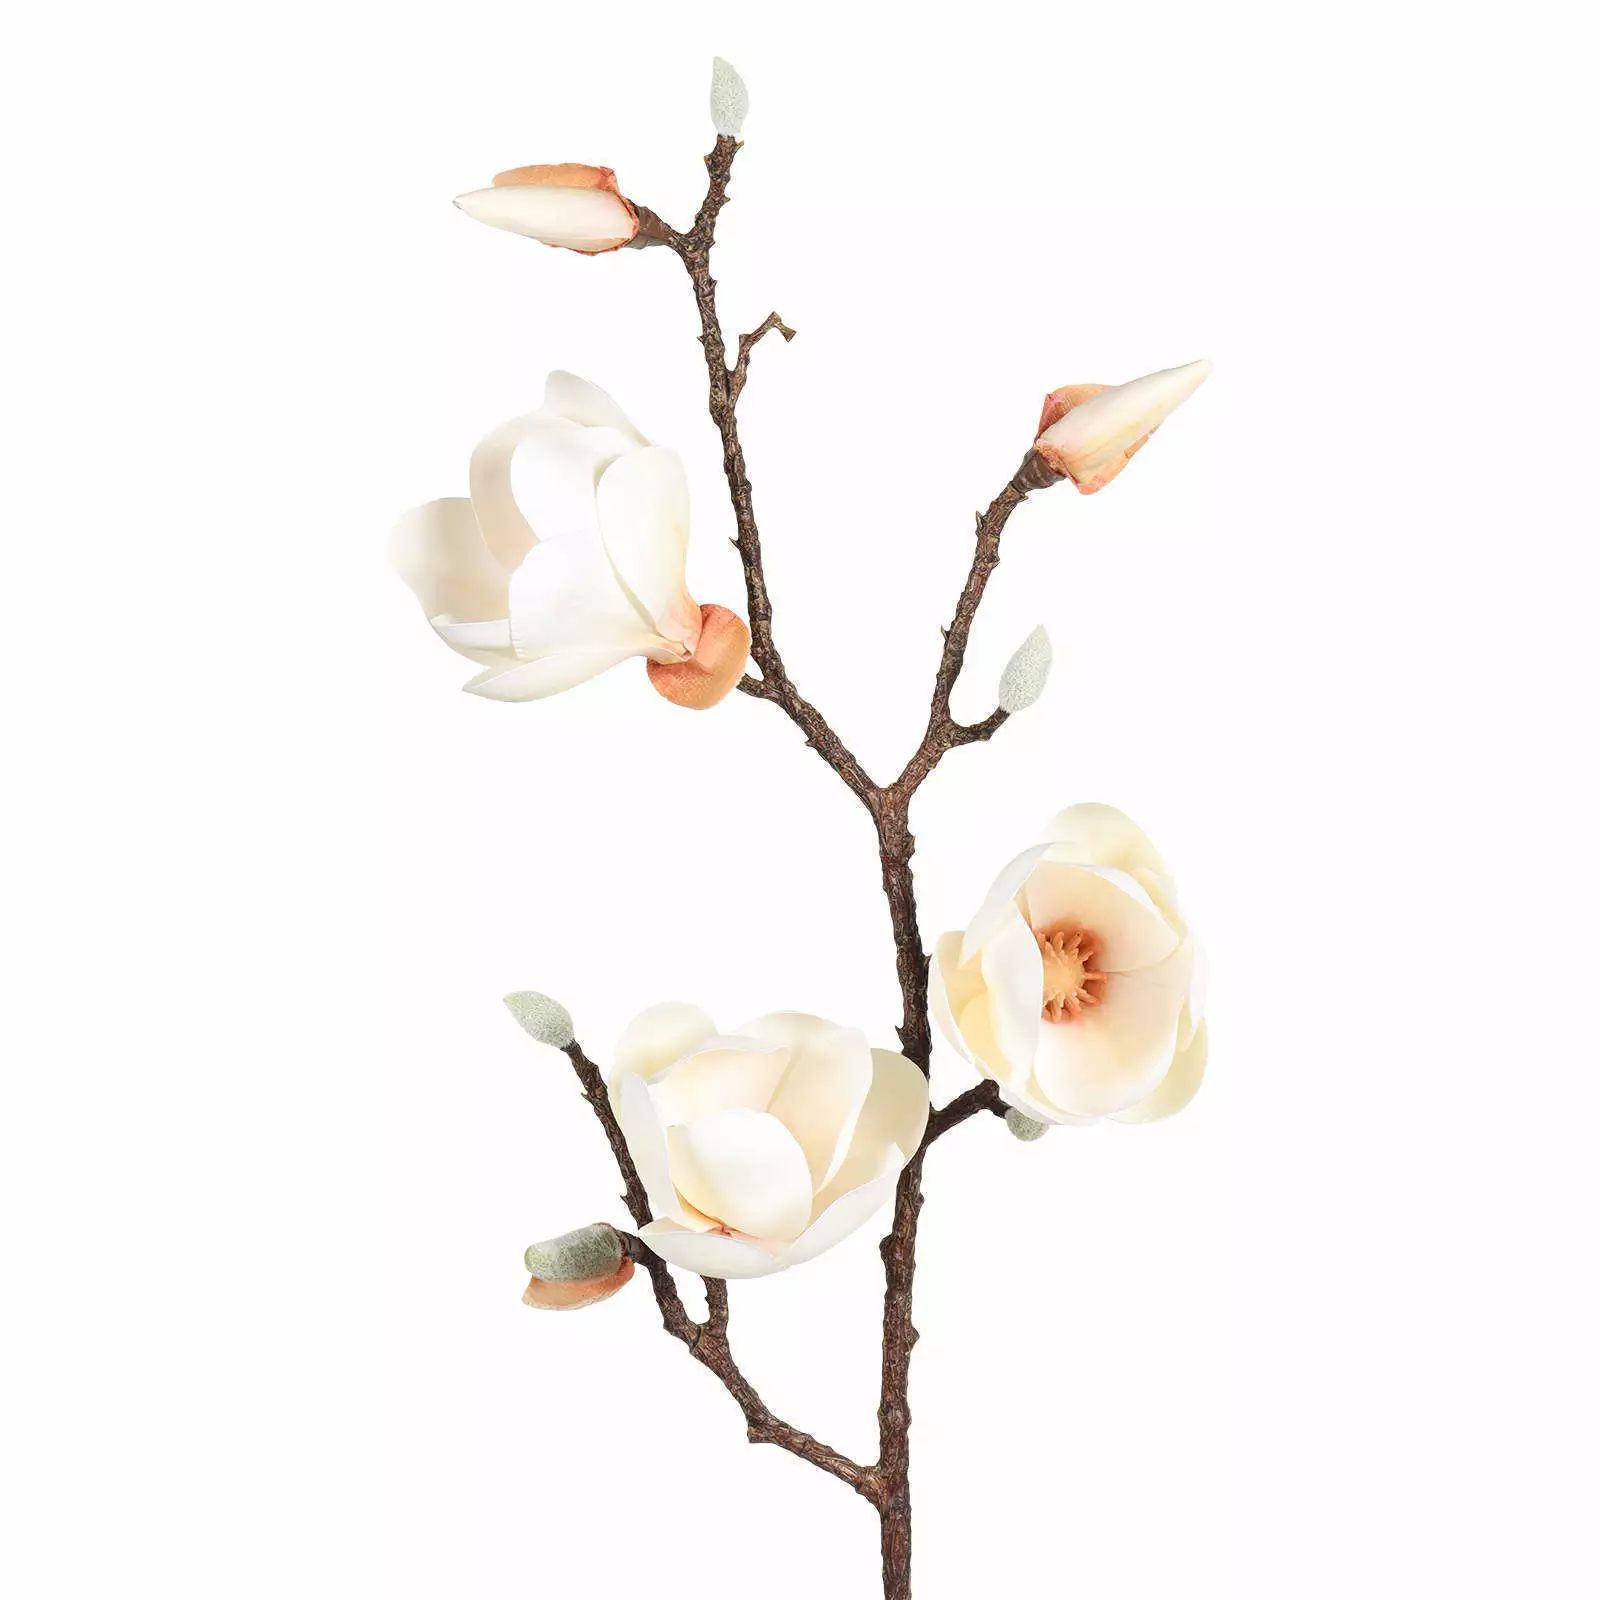 Artificial Pink Magnolia Flower, 30 Inch, 76 CM